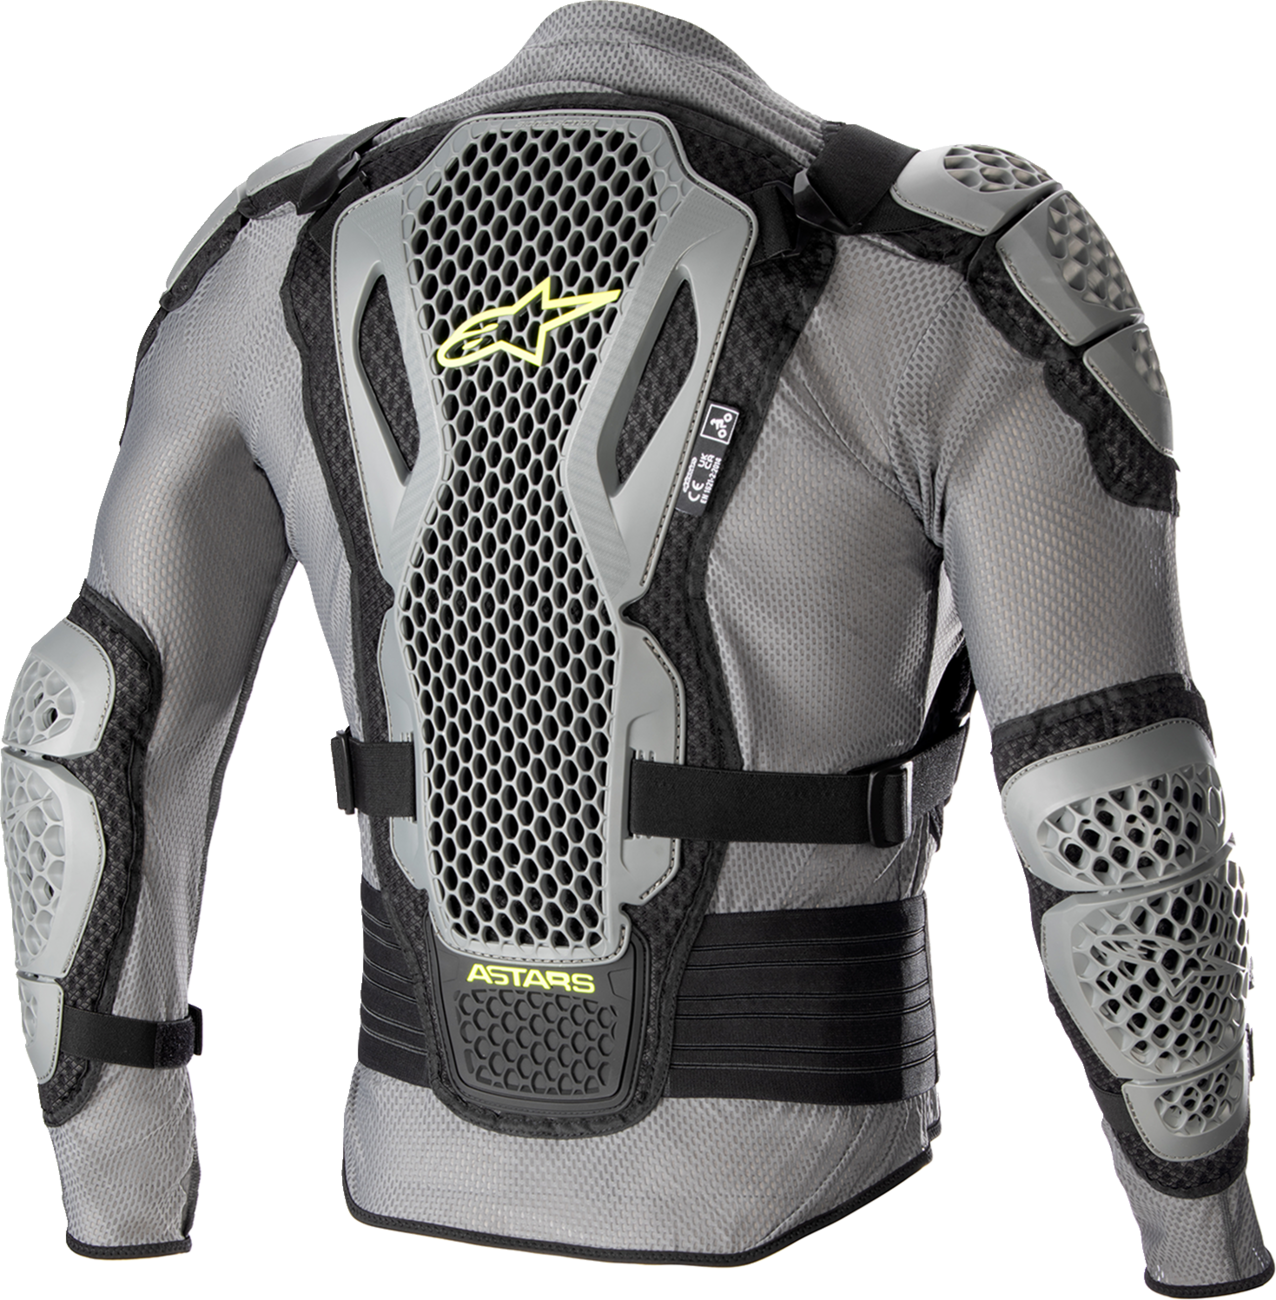 ALPINESTARS Bionic Action V2 Protection Jacket - Gray/Black/Yellow - Small 6506823-915-S